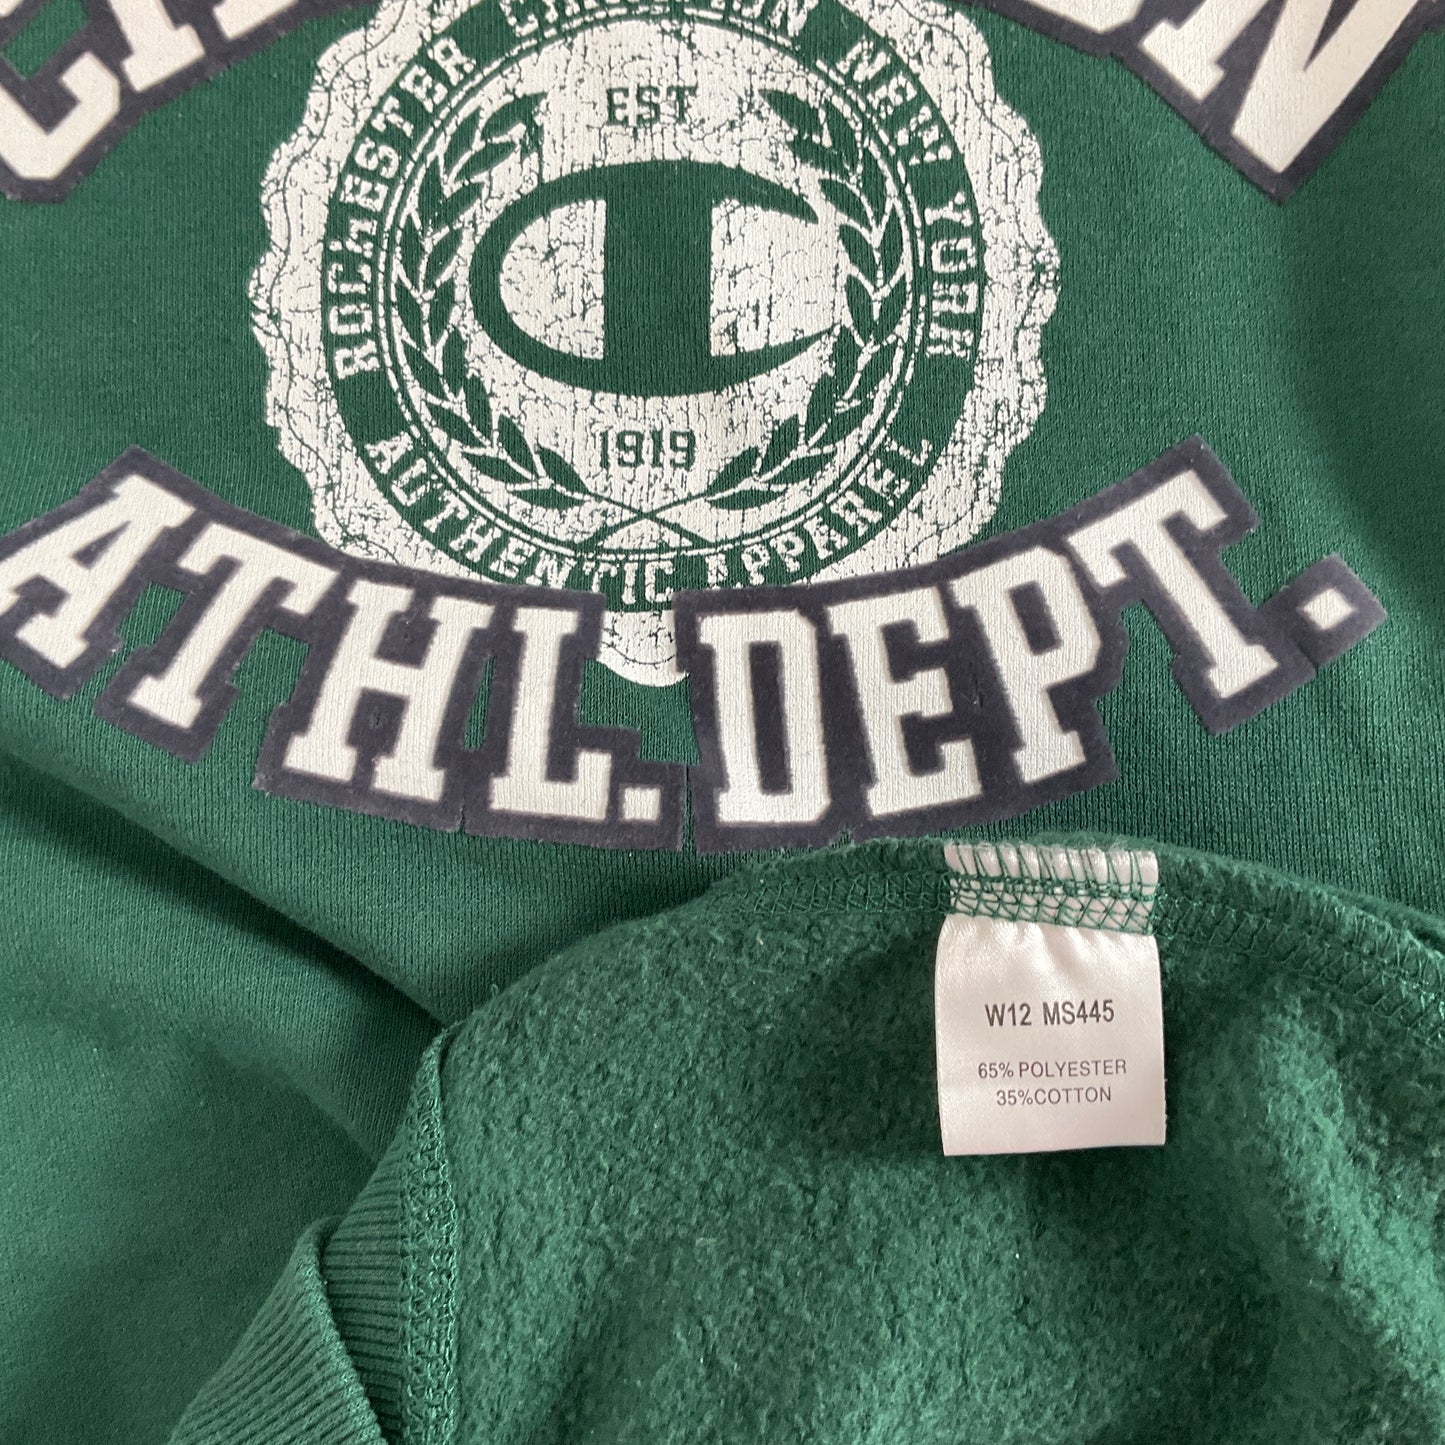 Champion - ATHL.DEPT Sweatshirt